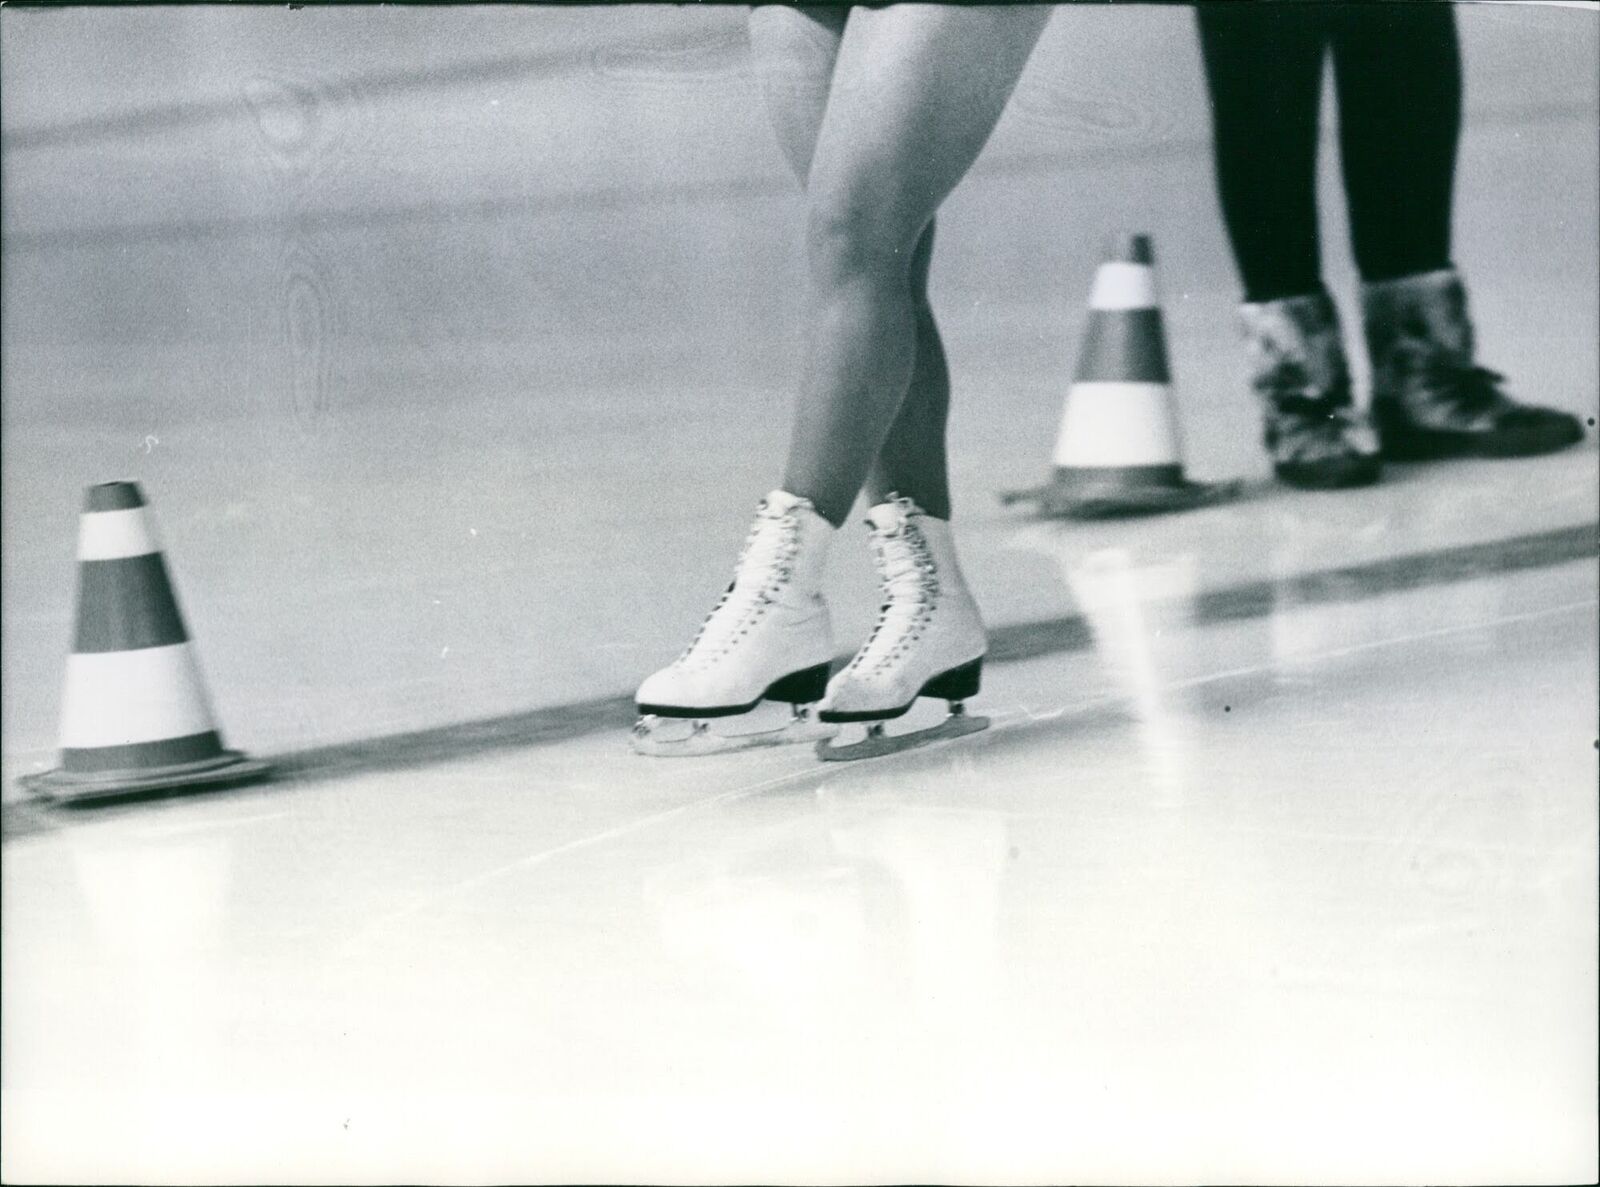 1968 Winter Olympics - Vintage Photograph 3761676